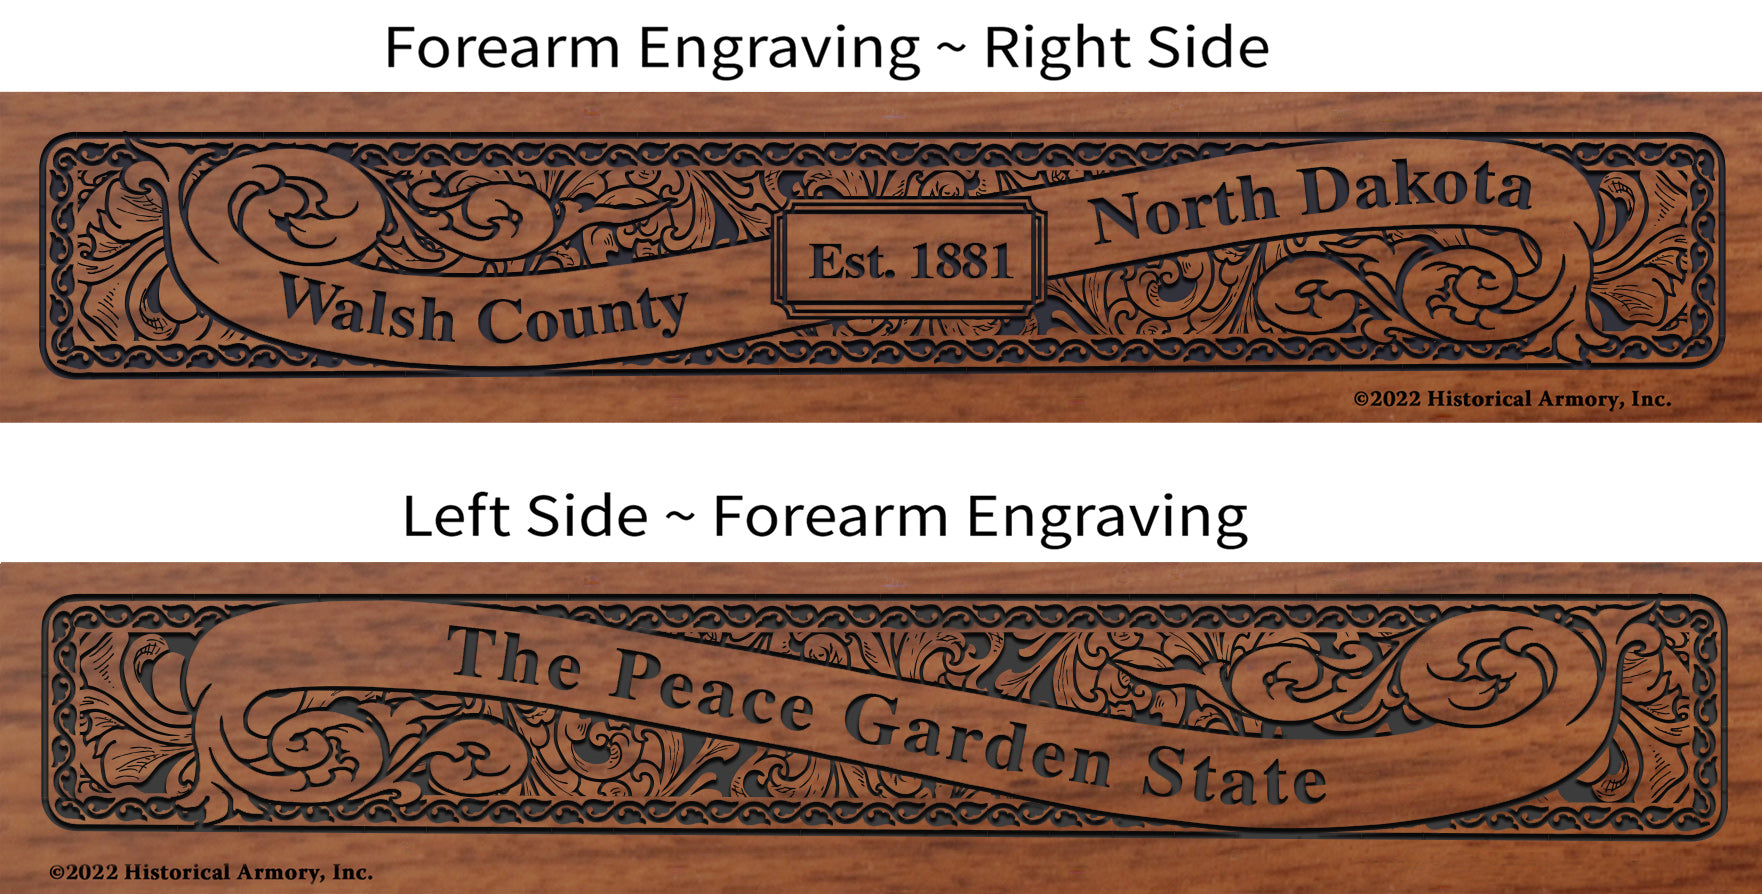 Walsh County North Dakota Engraved Rifle Forearm